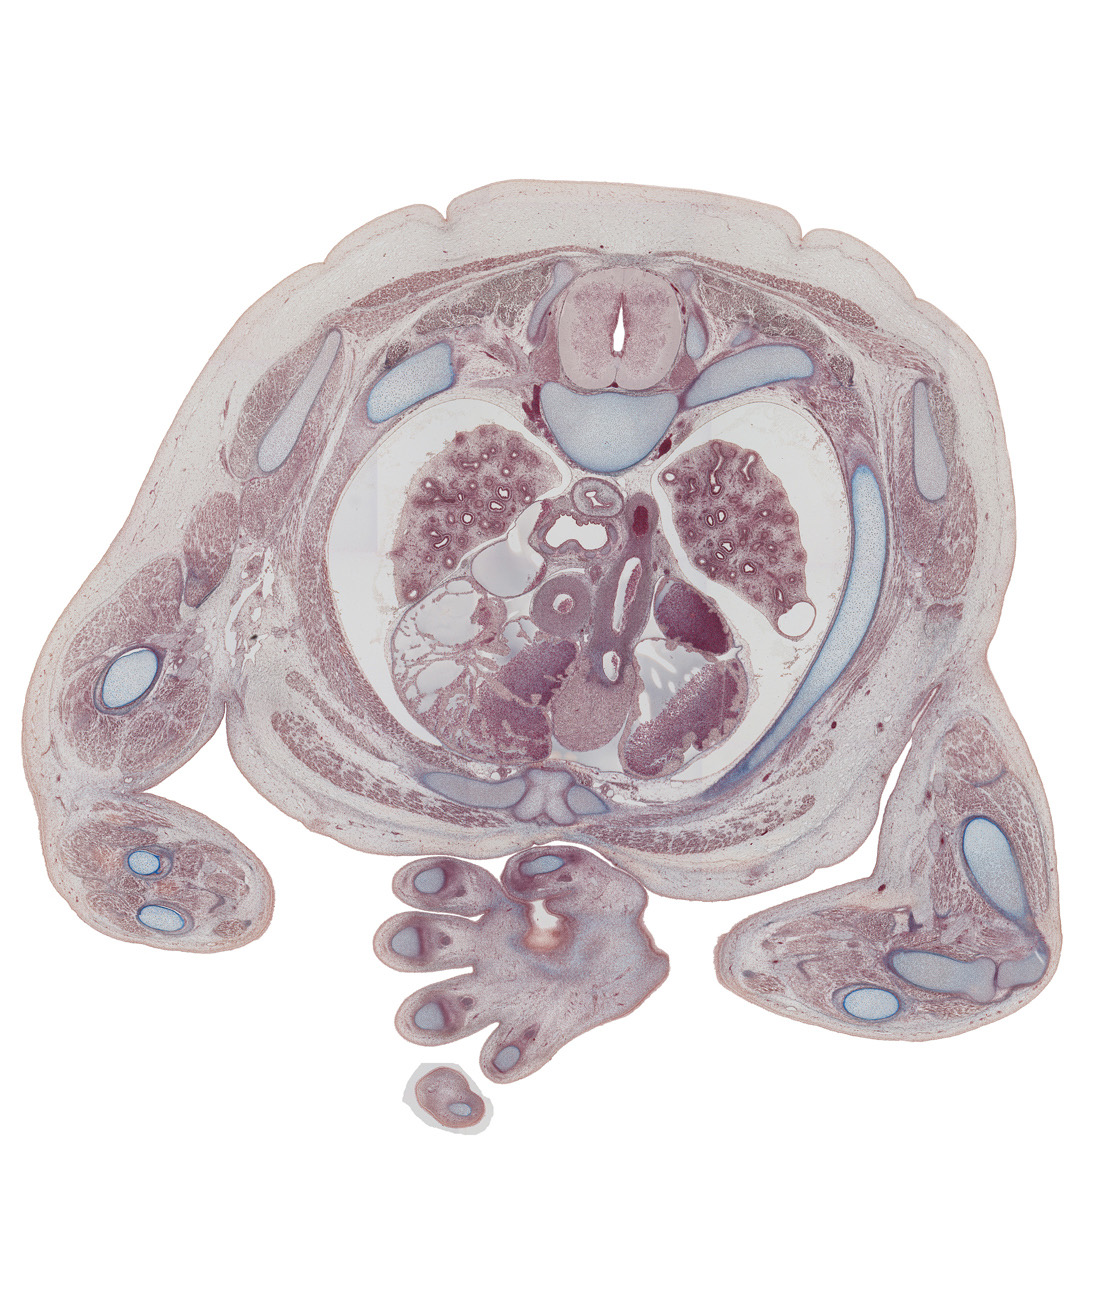 T-3 spinal ganglion, arch of azygos vein, ascending aorta, auricle of left atrium, auricle of right atrium, brachial artery, descending aorta, dorsal horn of grey matter, ductus arteriosus, external intercostal muscle(s), head of radius, humerus, internal intercostal muscle(s), lateral horn of grey matter, left vagus nerve (CN X), palmar aponeurosis, pectoralis major muscle, rhomboid major muscle, rib 3 (costal cartilage), rib 4, right vagus nerve (CN X), scapula, shaft of rib 3, sternocostal muscle, superior vena cava, sympathetic trunk, tracheal bifurcation, ventral horn of grey matter, vestibule of right ventricle